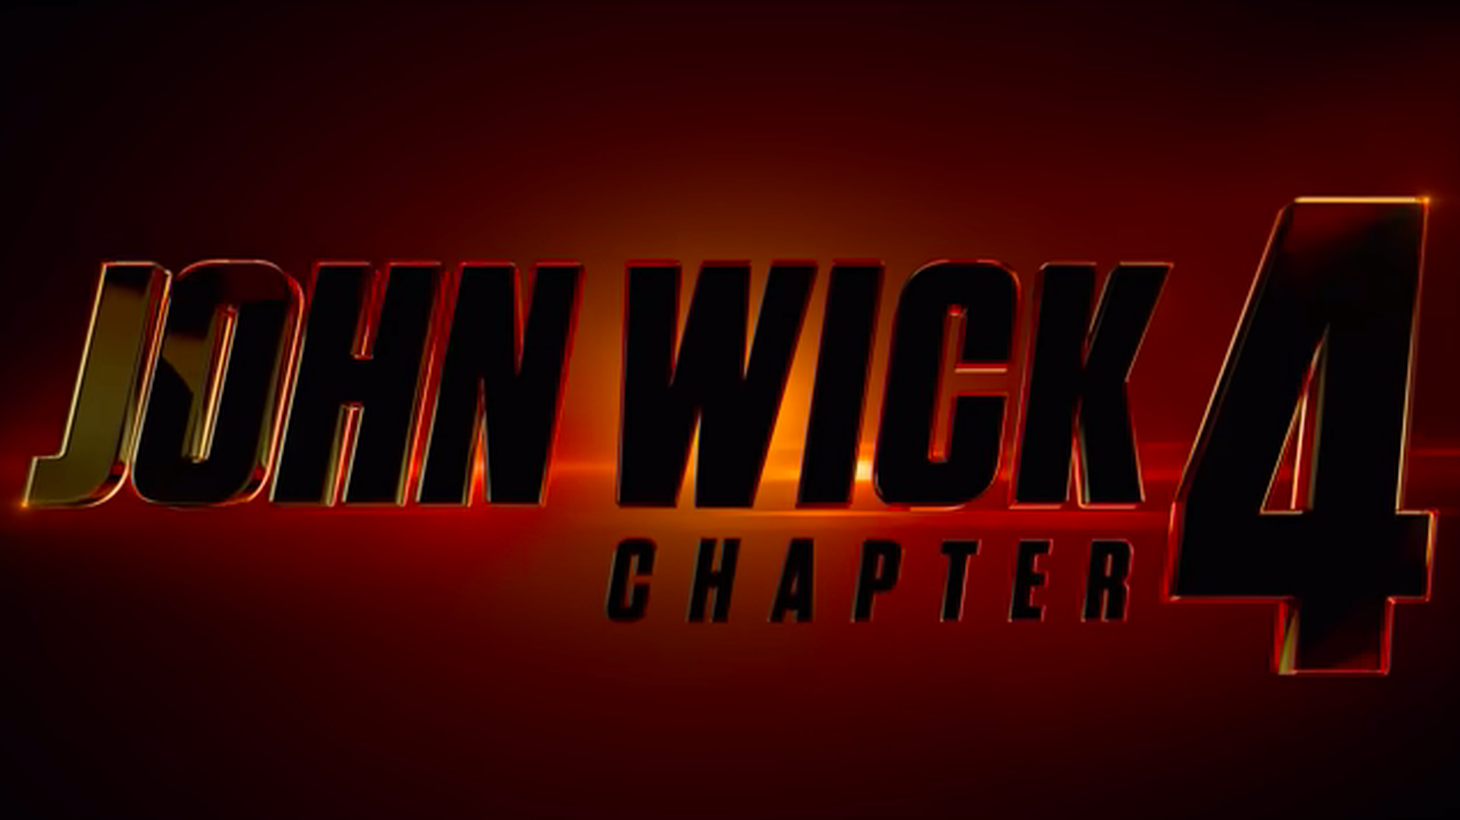 John Wick 4' Trailer: Keanu Reeves Kill for His Freedom